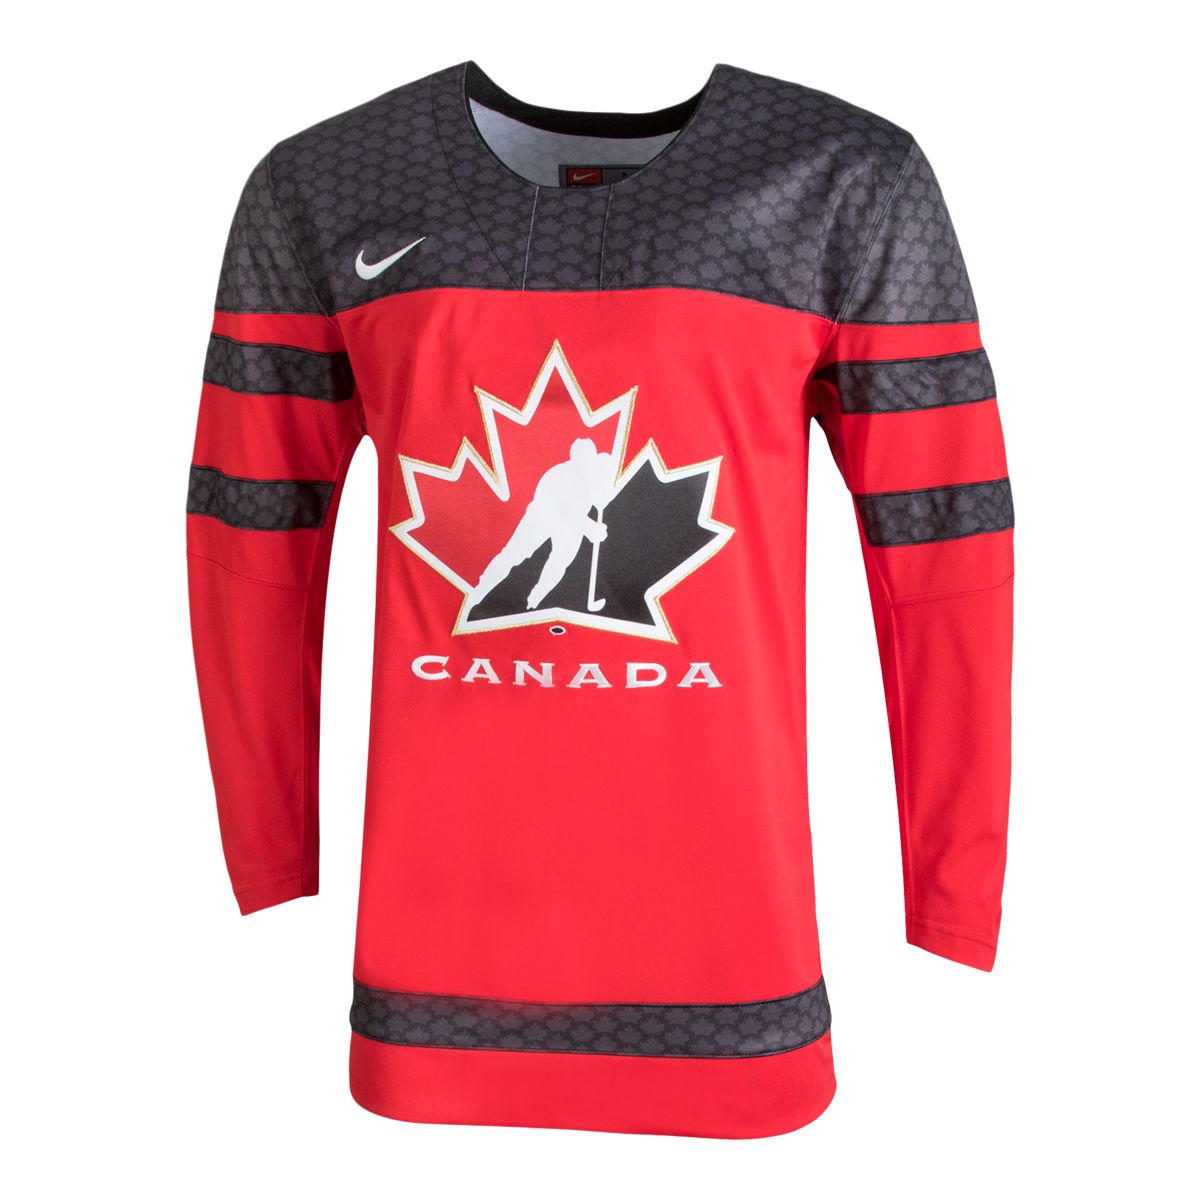 Boys l/xl Toronto raptors hockey jersey Nike